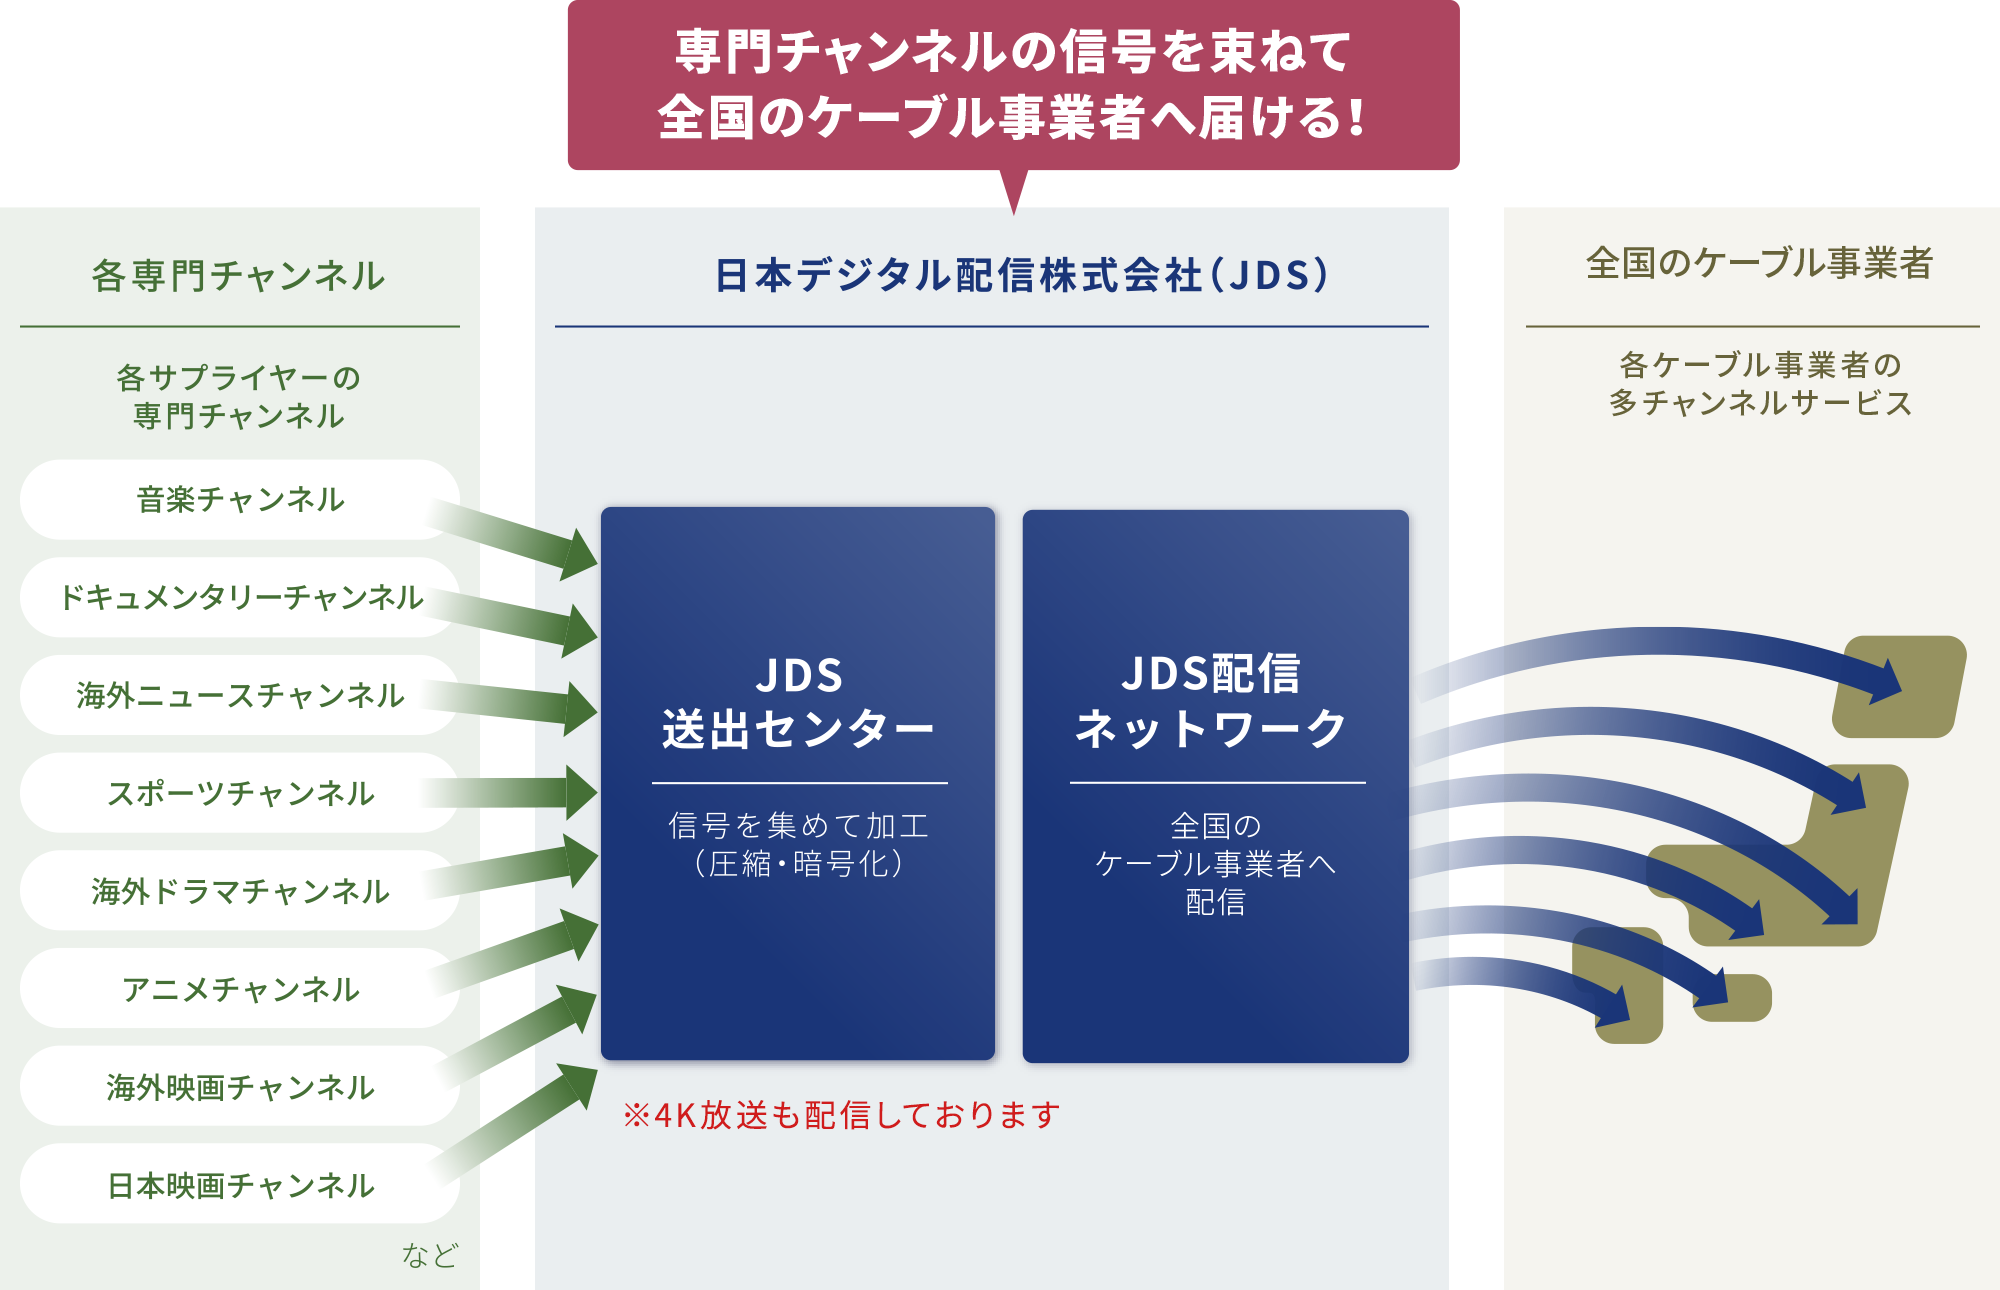 Jdsのサービスを支える技術力 新卒採用 Jds 日本デジタル配信株式会社 Jdserve Co Jp